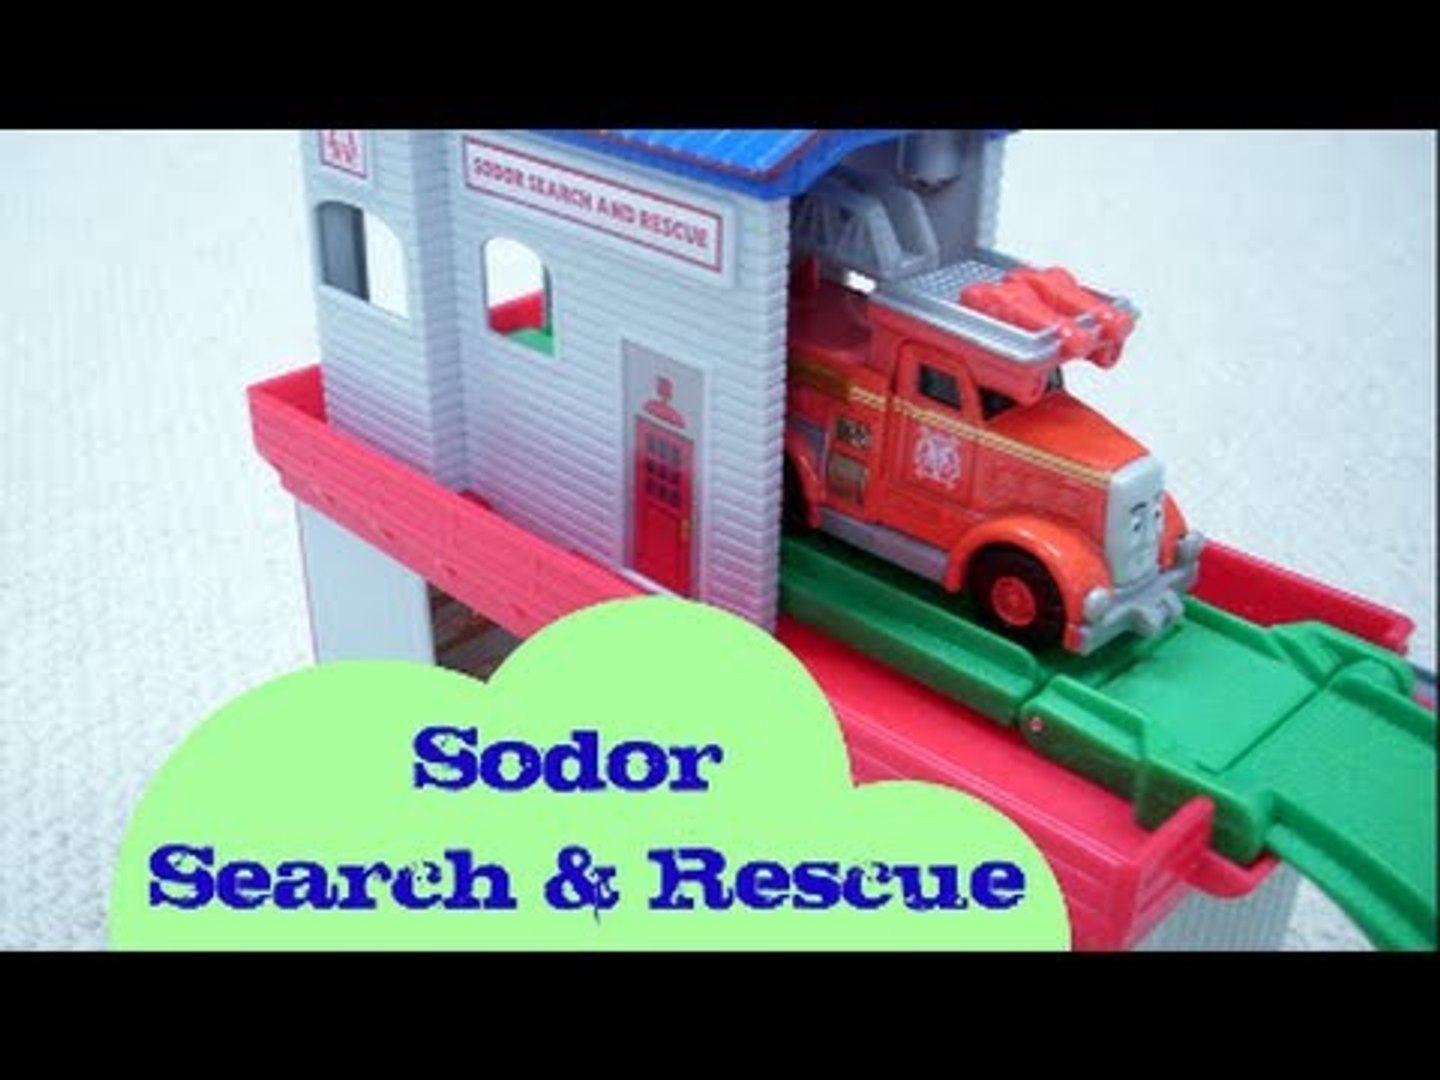 thomas trackmaster fire rescue